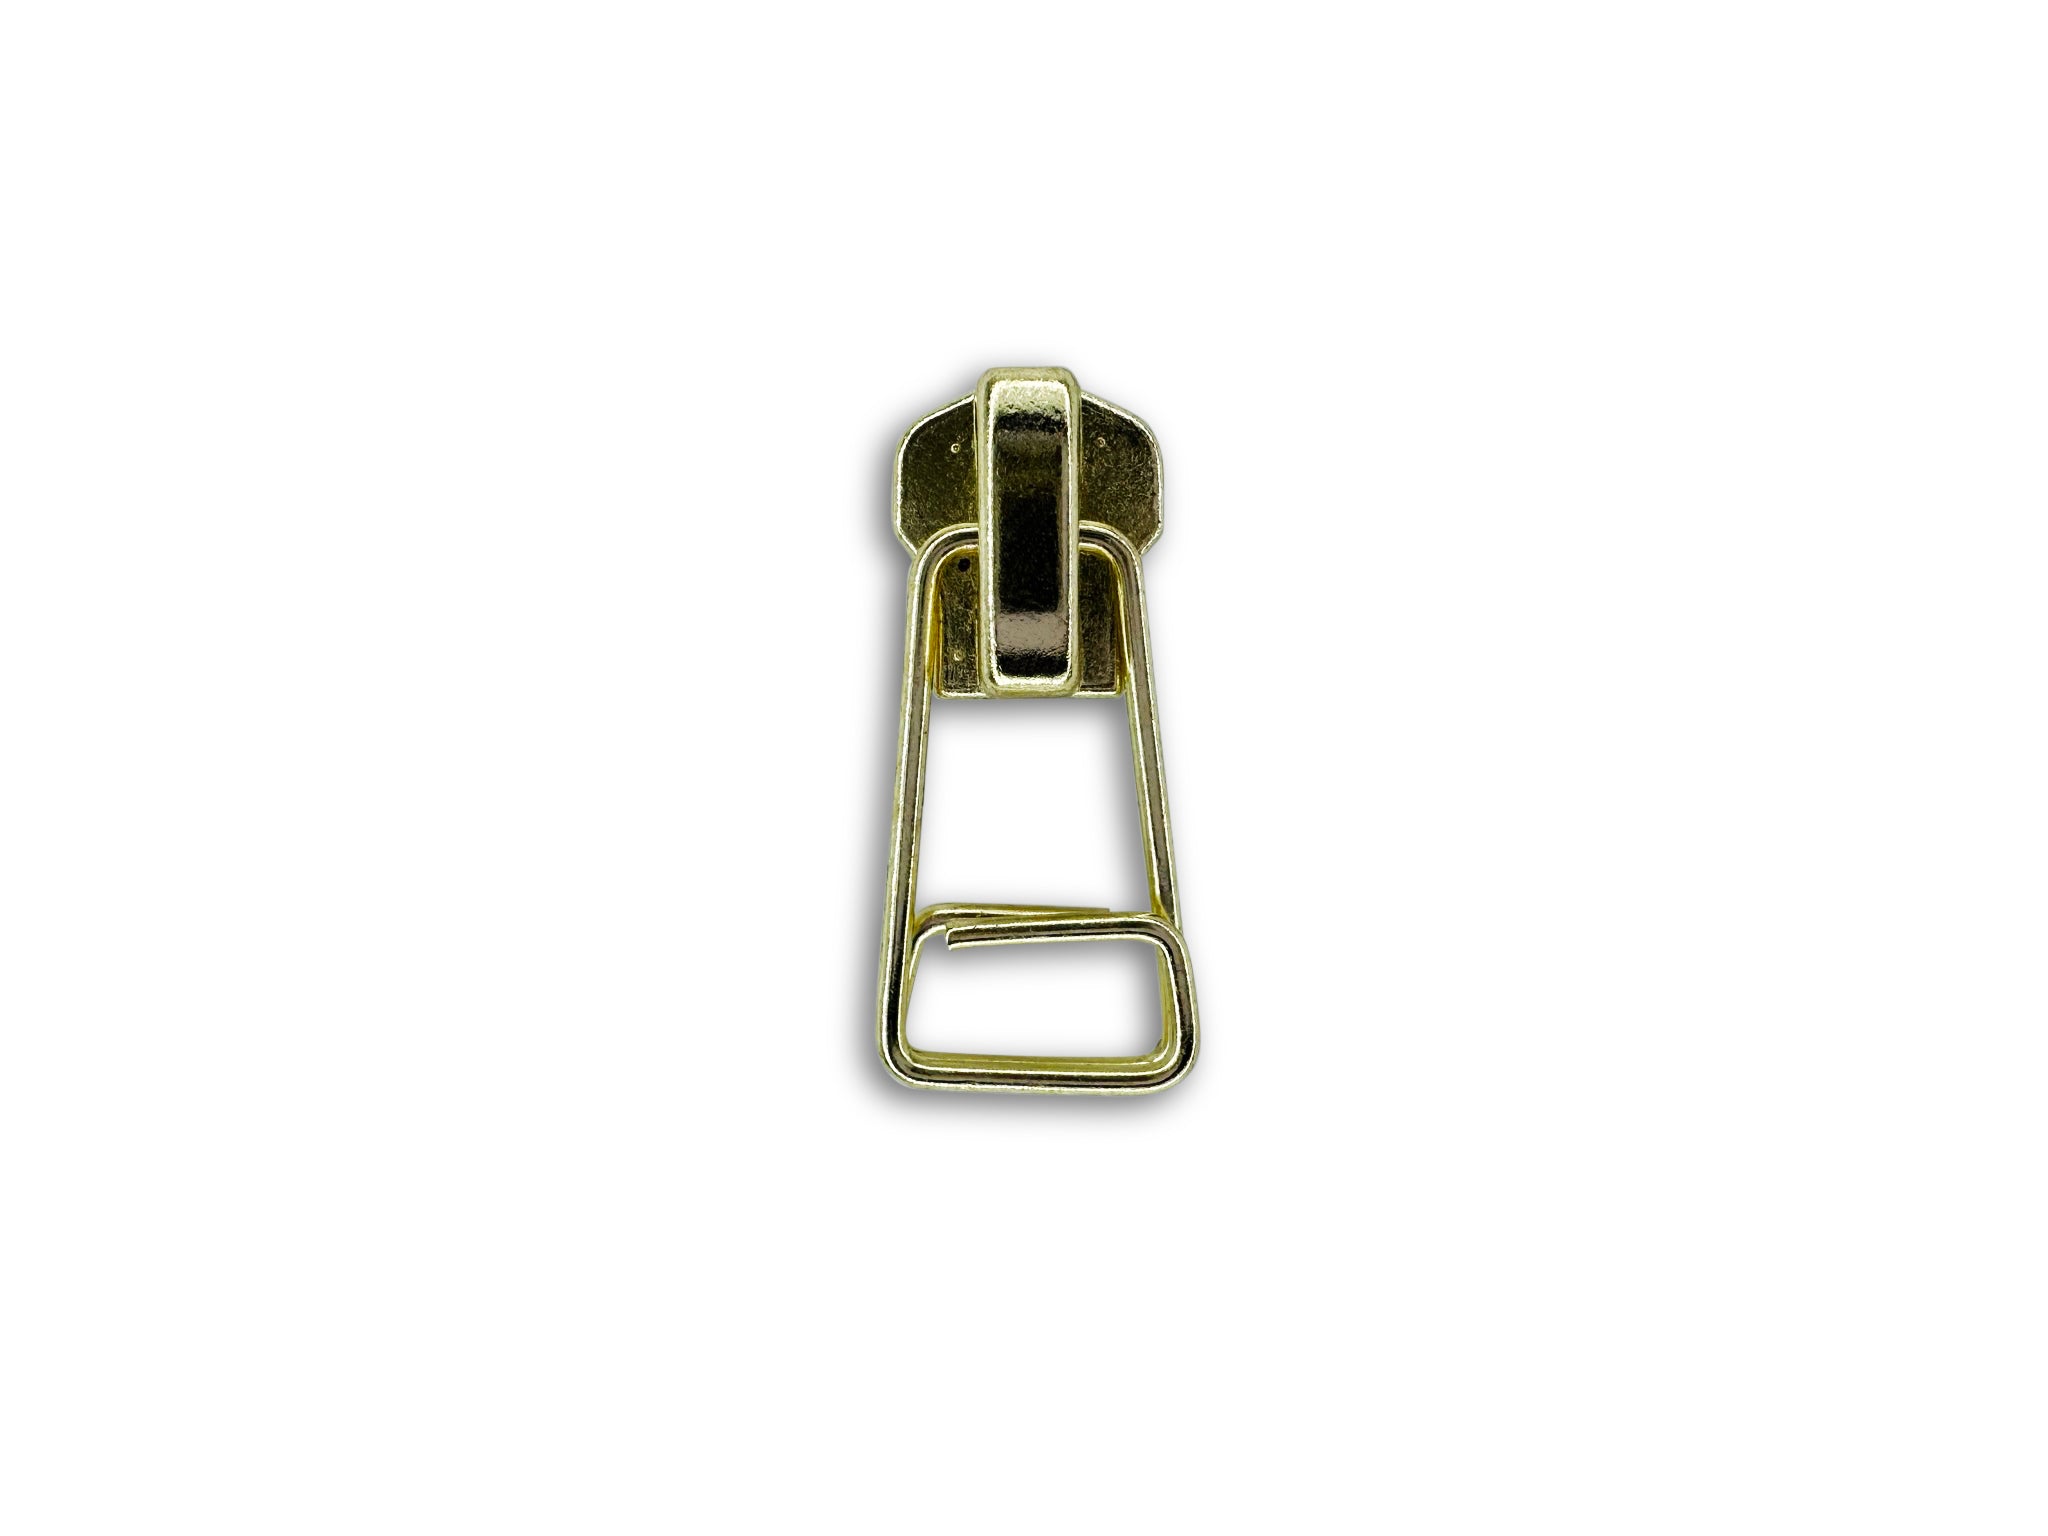 #5 Standard Autolock Slider For Metal Zipper